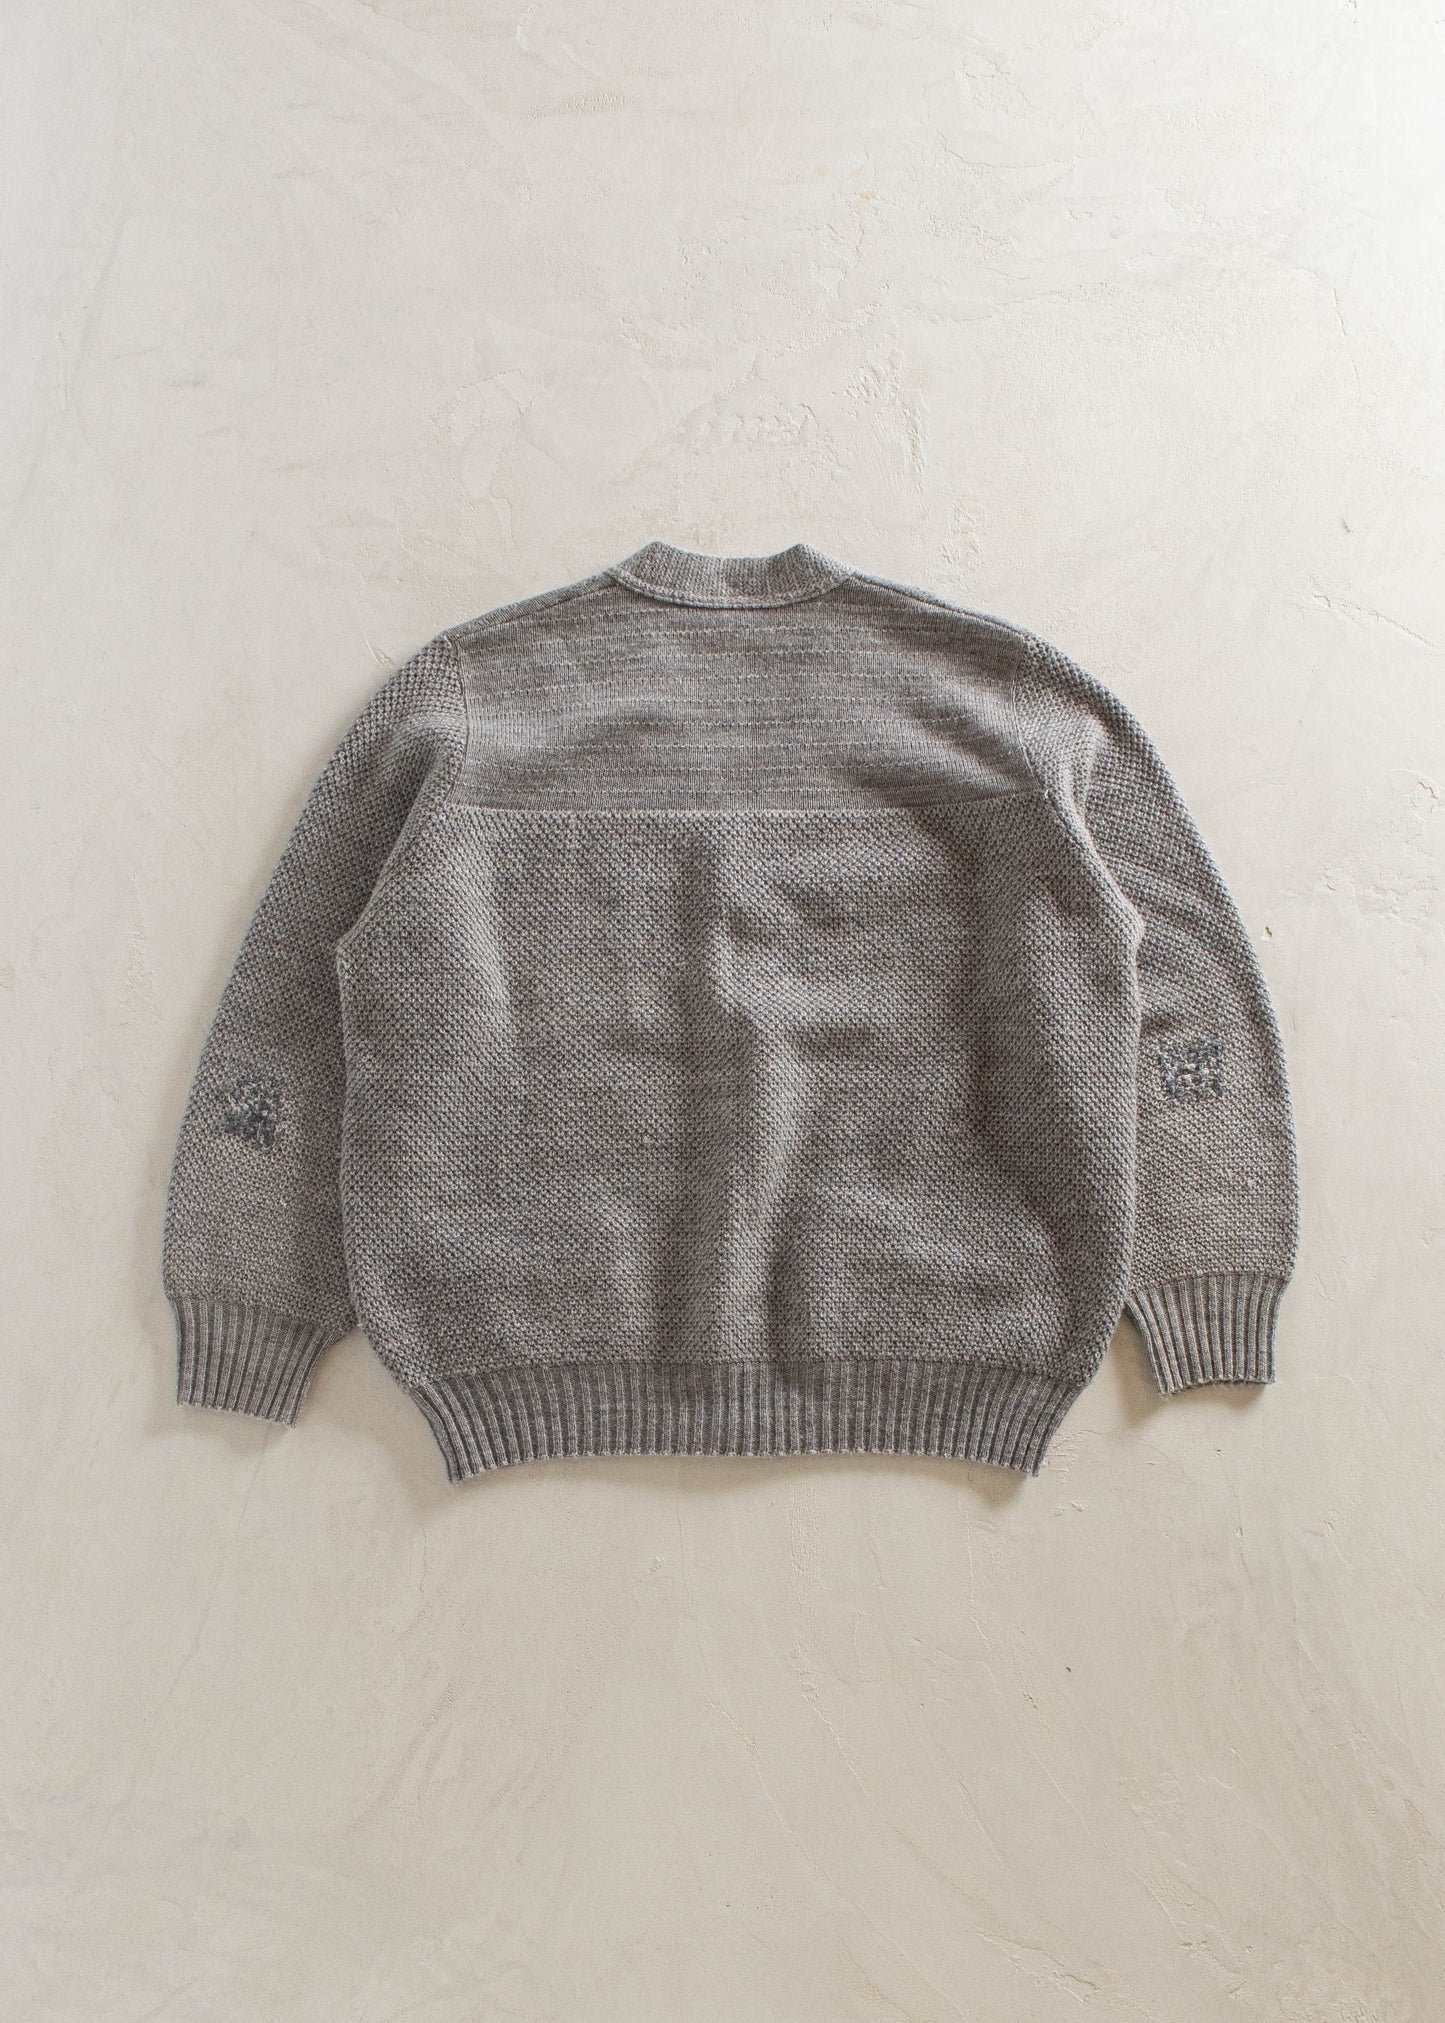 1980s Cooper Knitting Mills Cardigan Size M/L